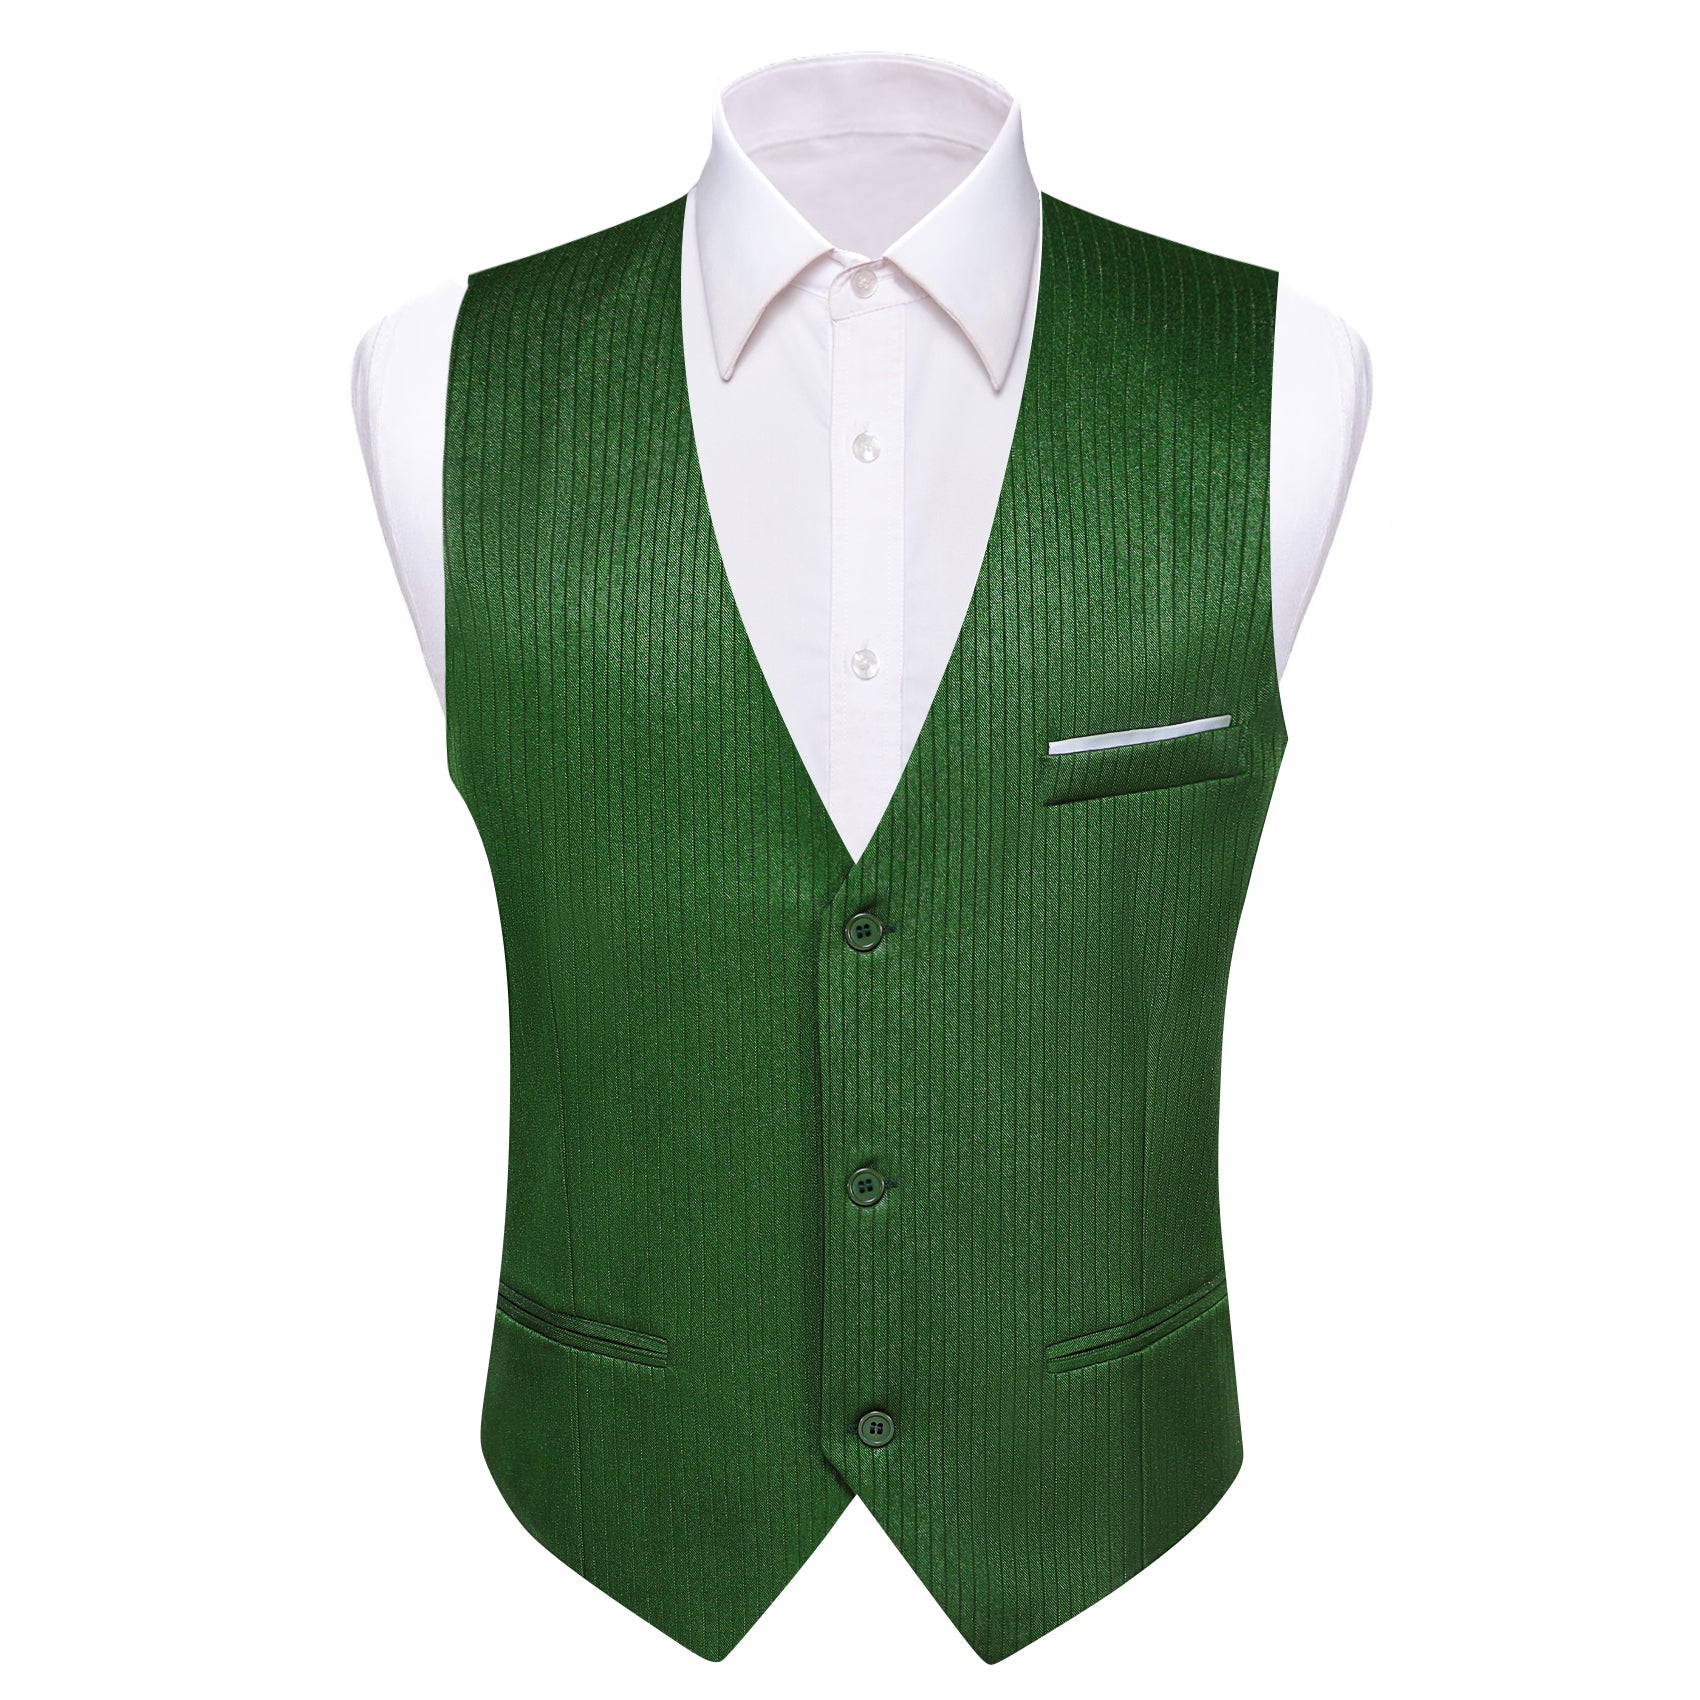 Grass Green Solid Business Suit Waistcoat Vest